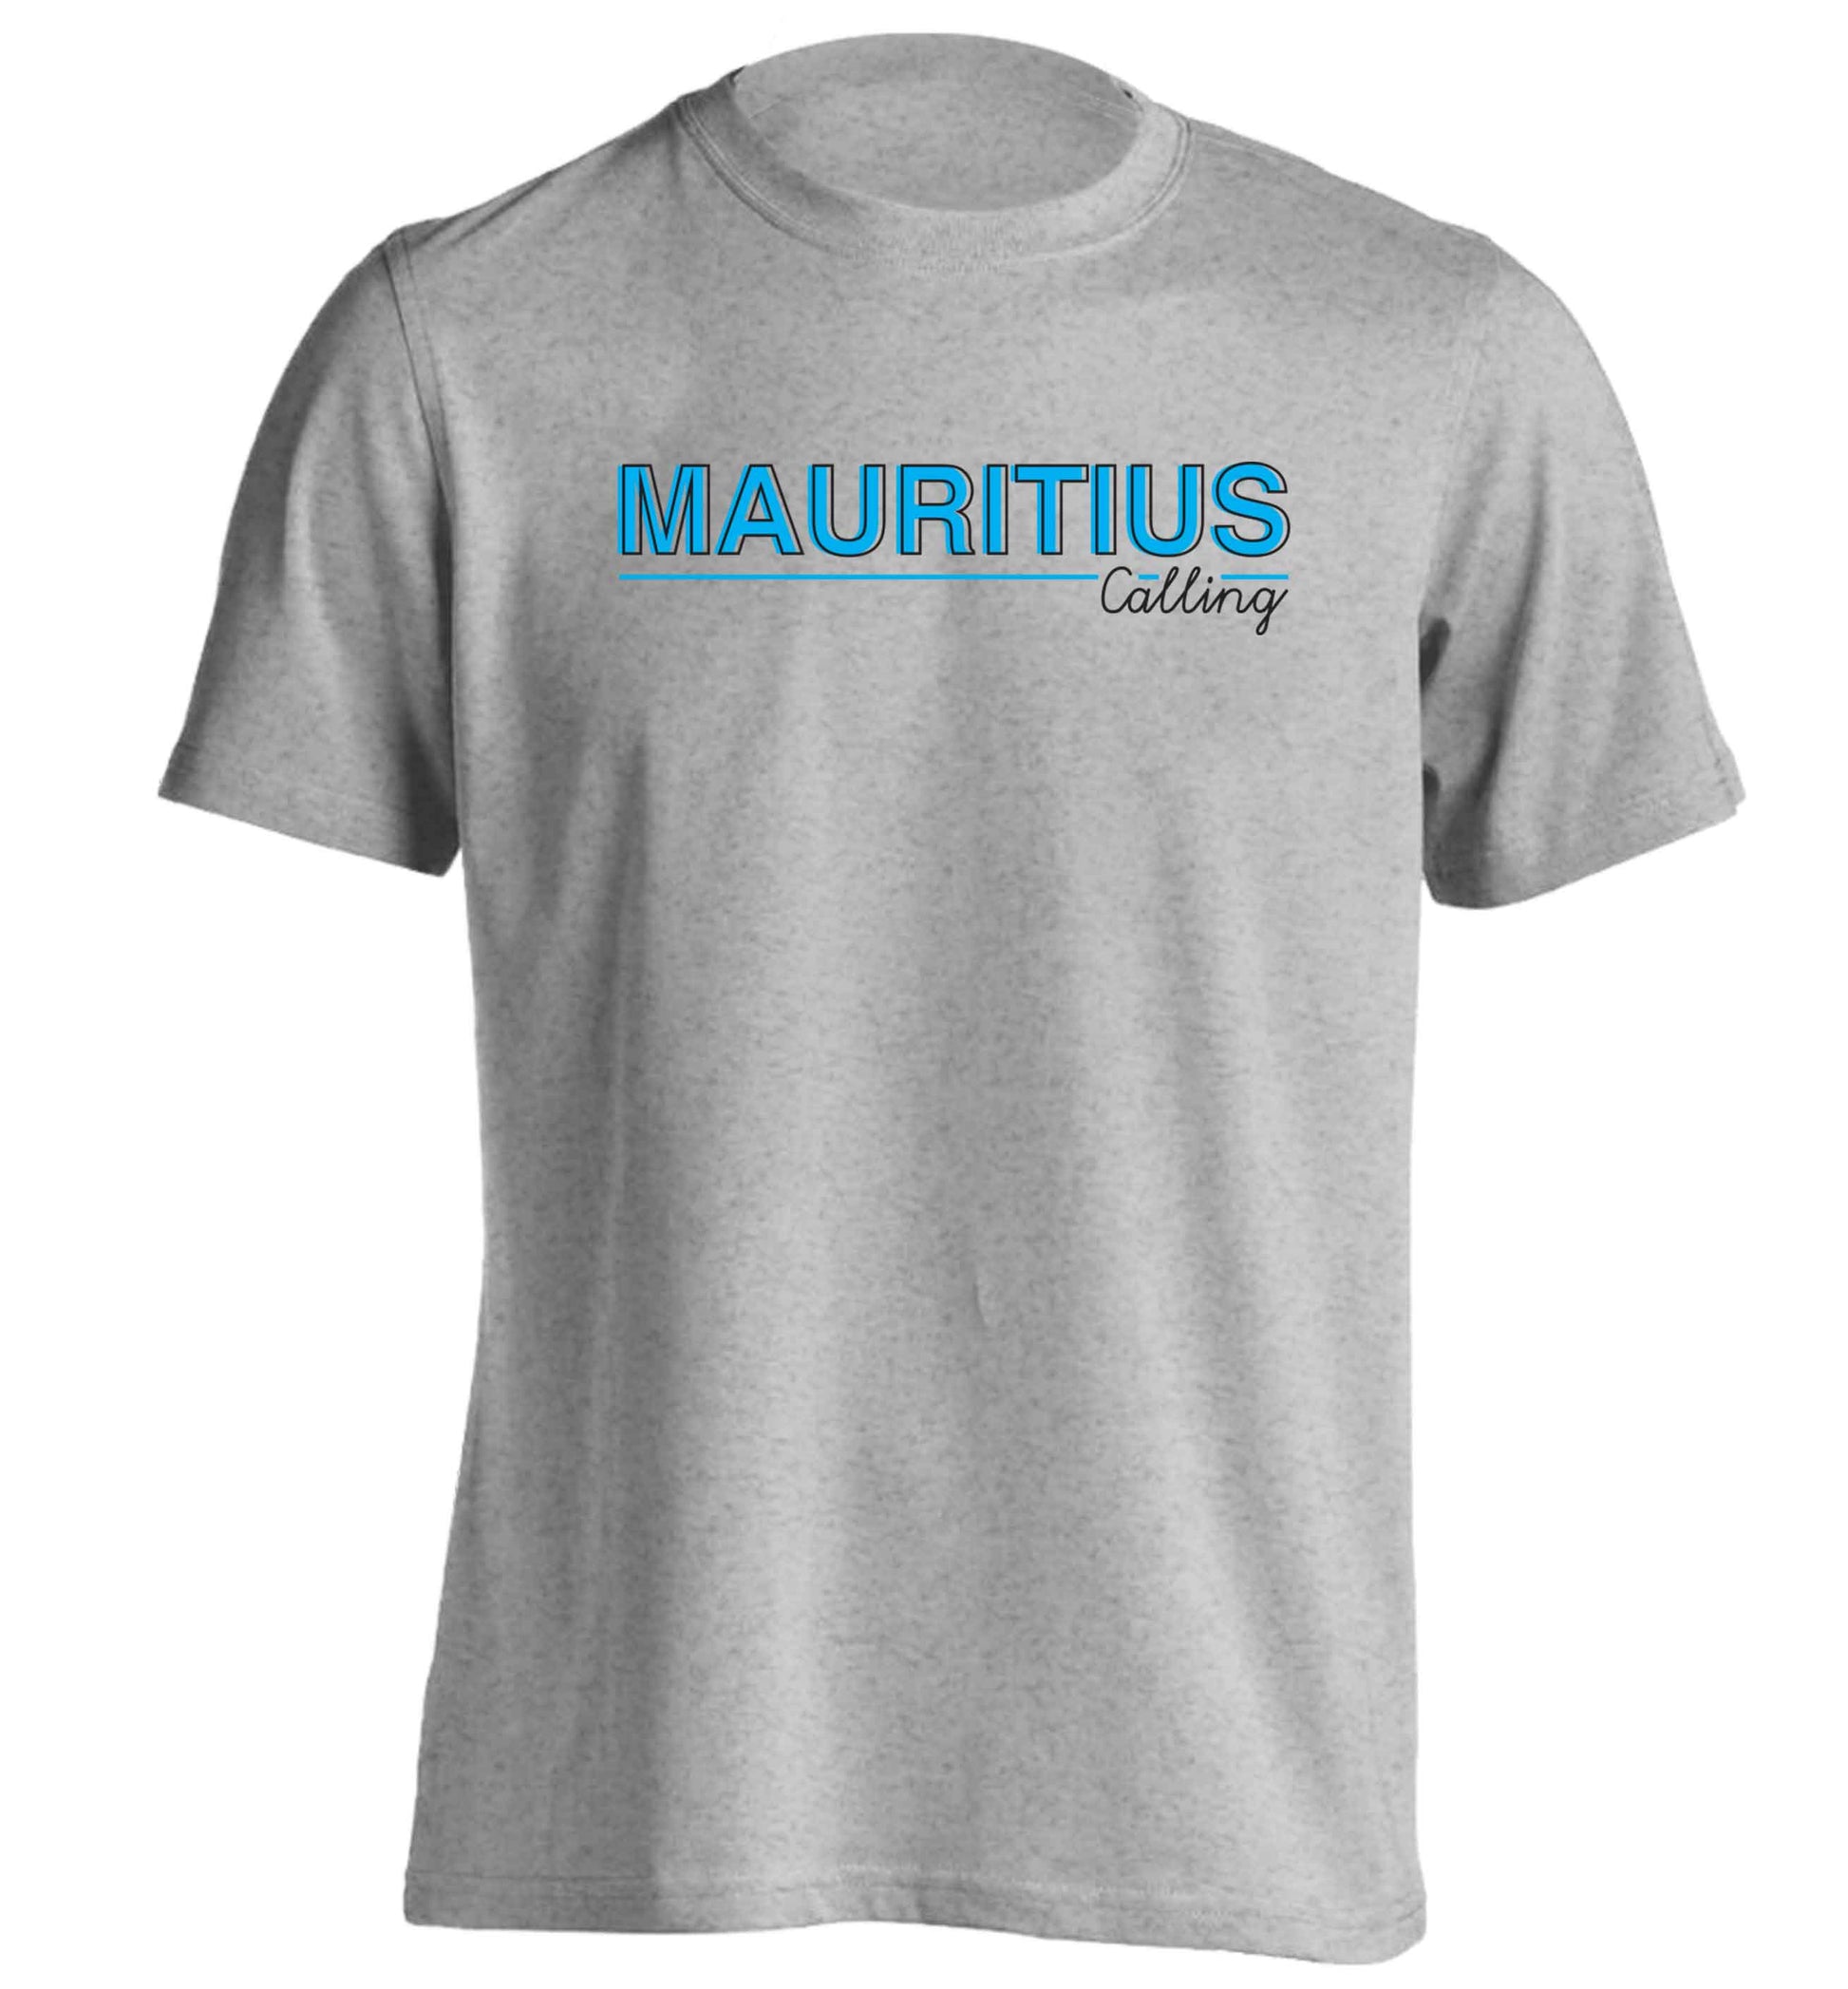 Mauritius calling adults unisex grey Tshirt 2XL